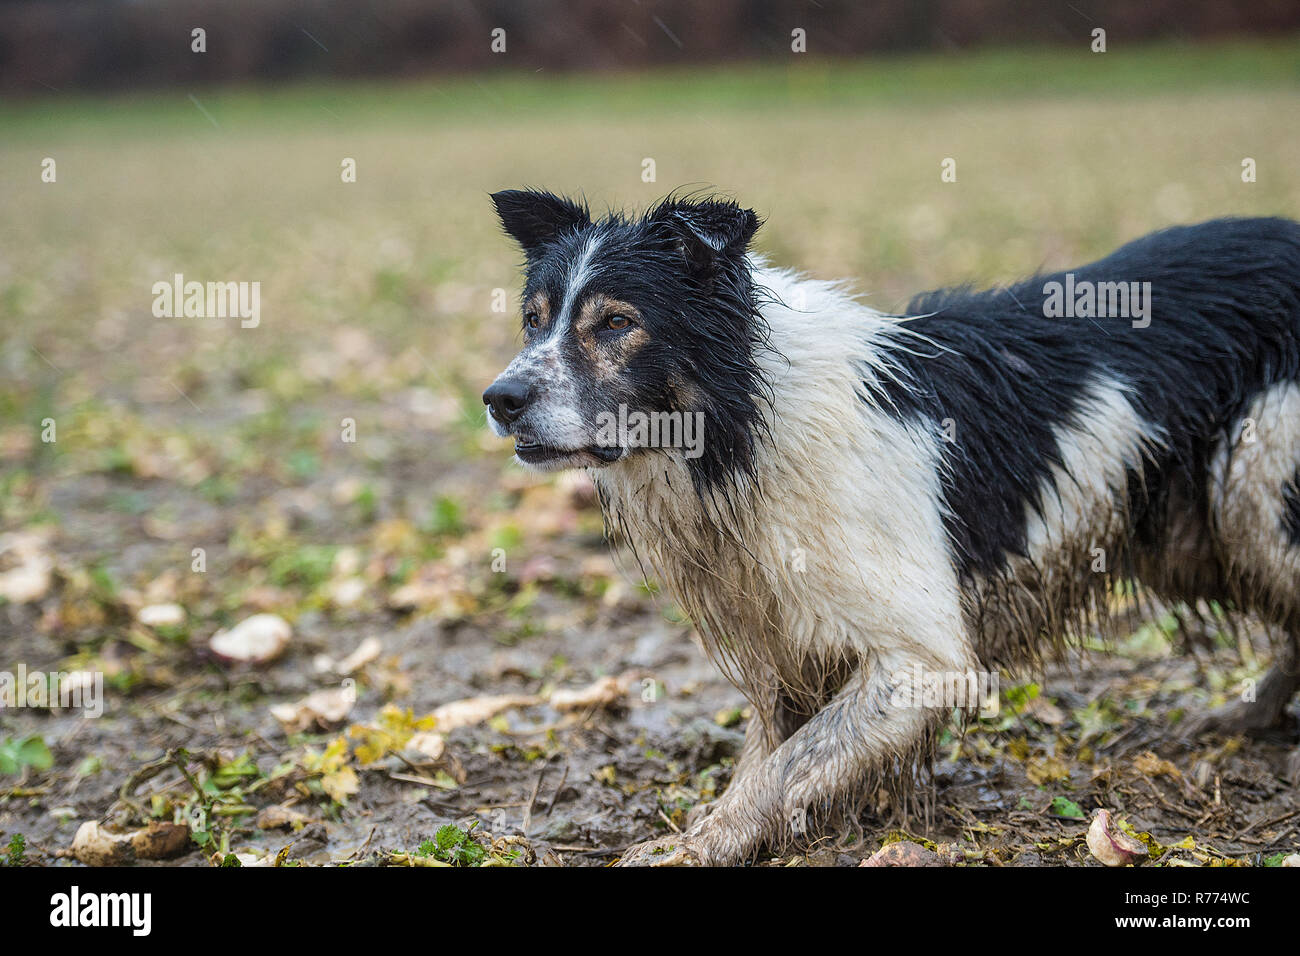 wet sheepdog at work Stock Photo